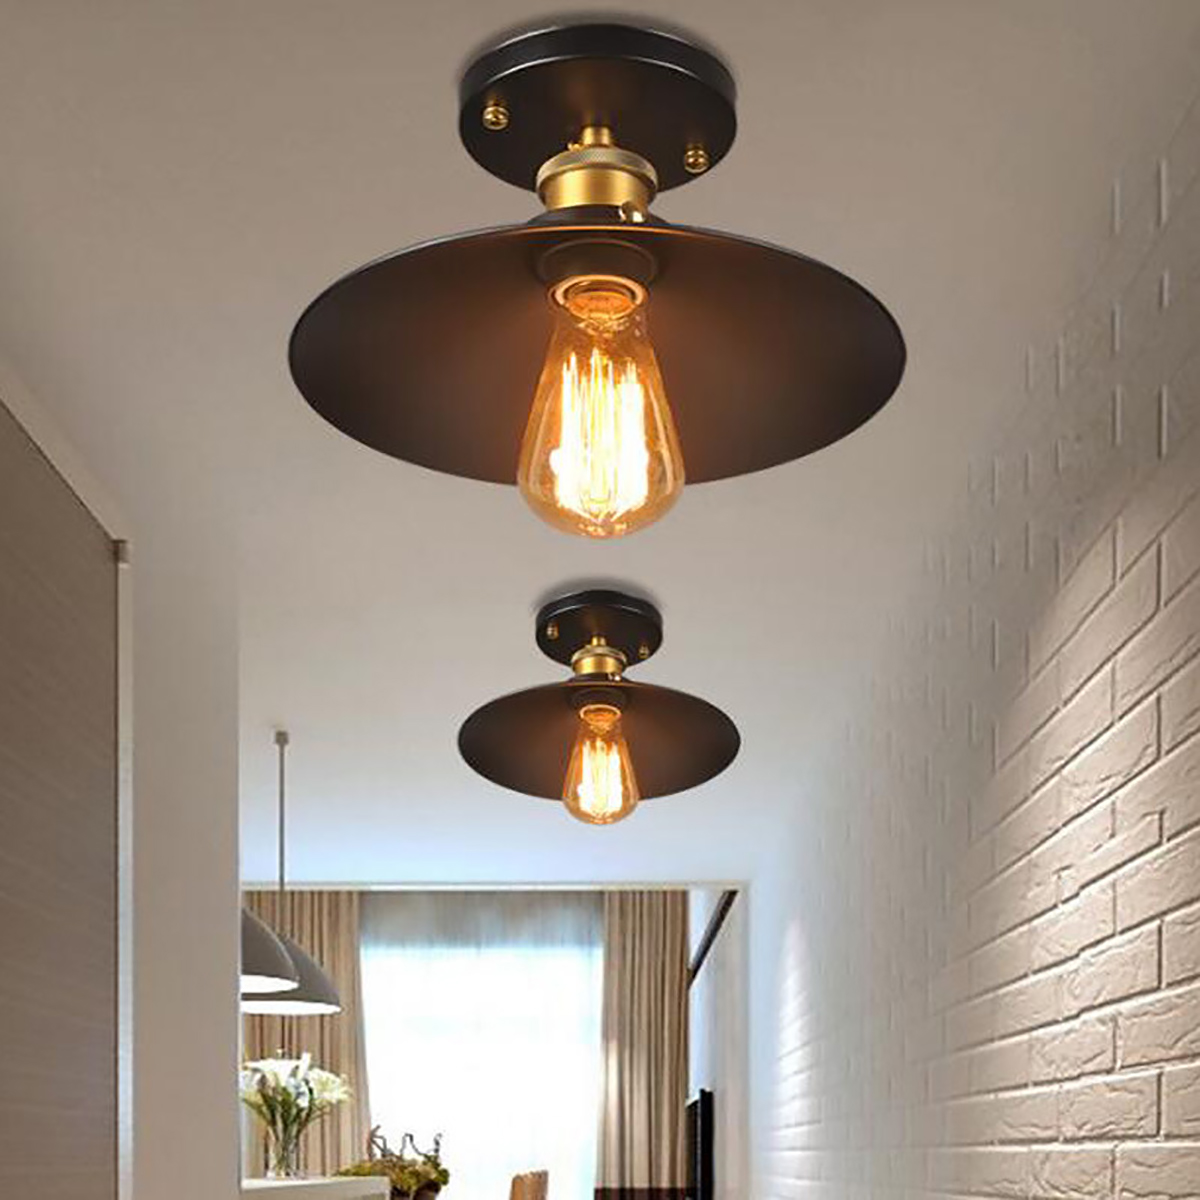 E26E27-Industrial-Ceiling-Light-Pendant-Fixture-Lamp-Home-Living-Room-Decor-1670455-1